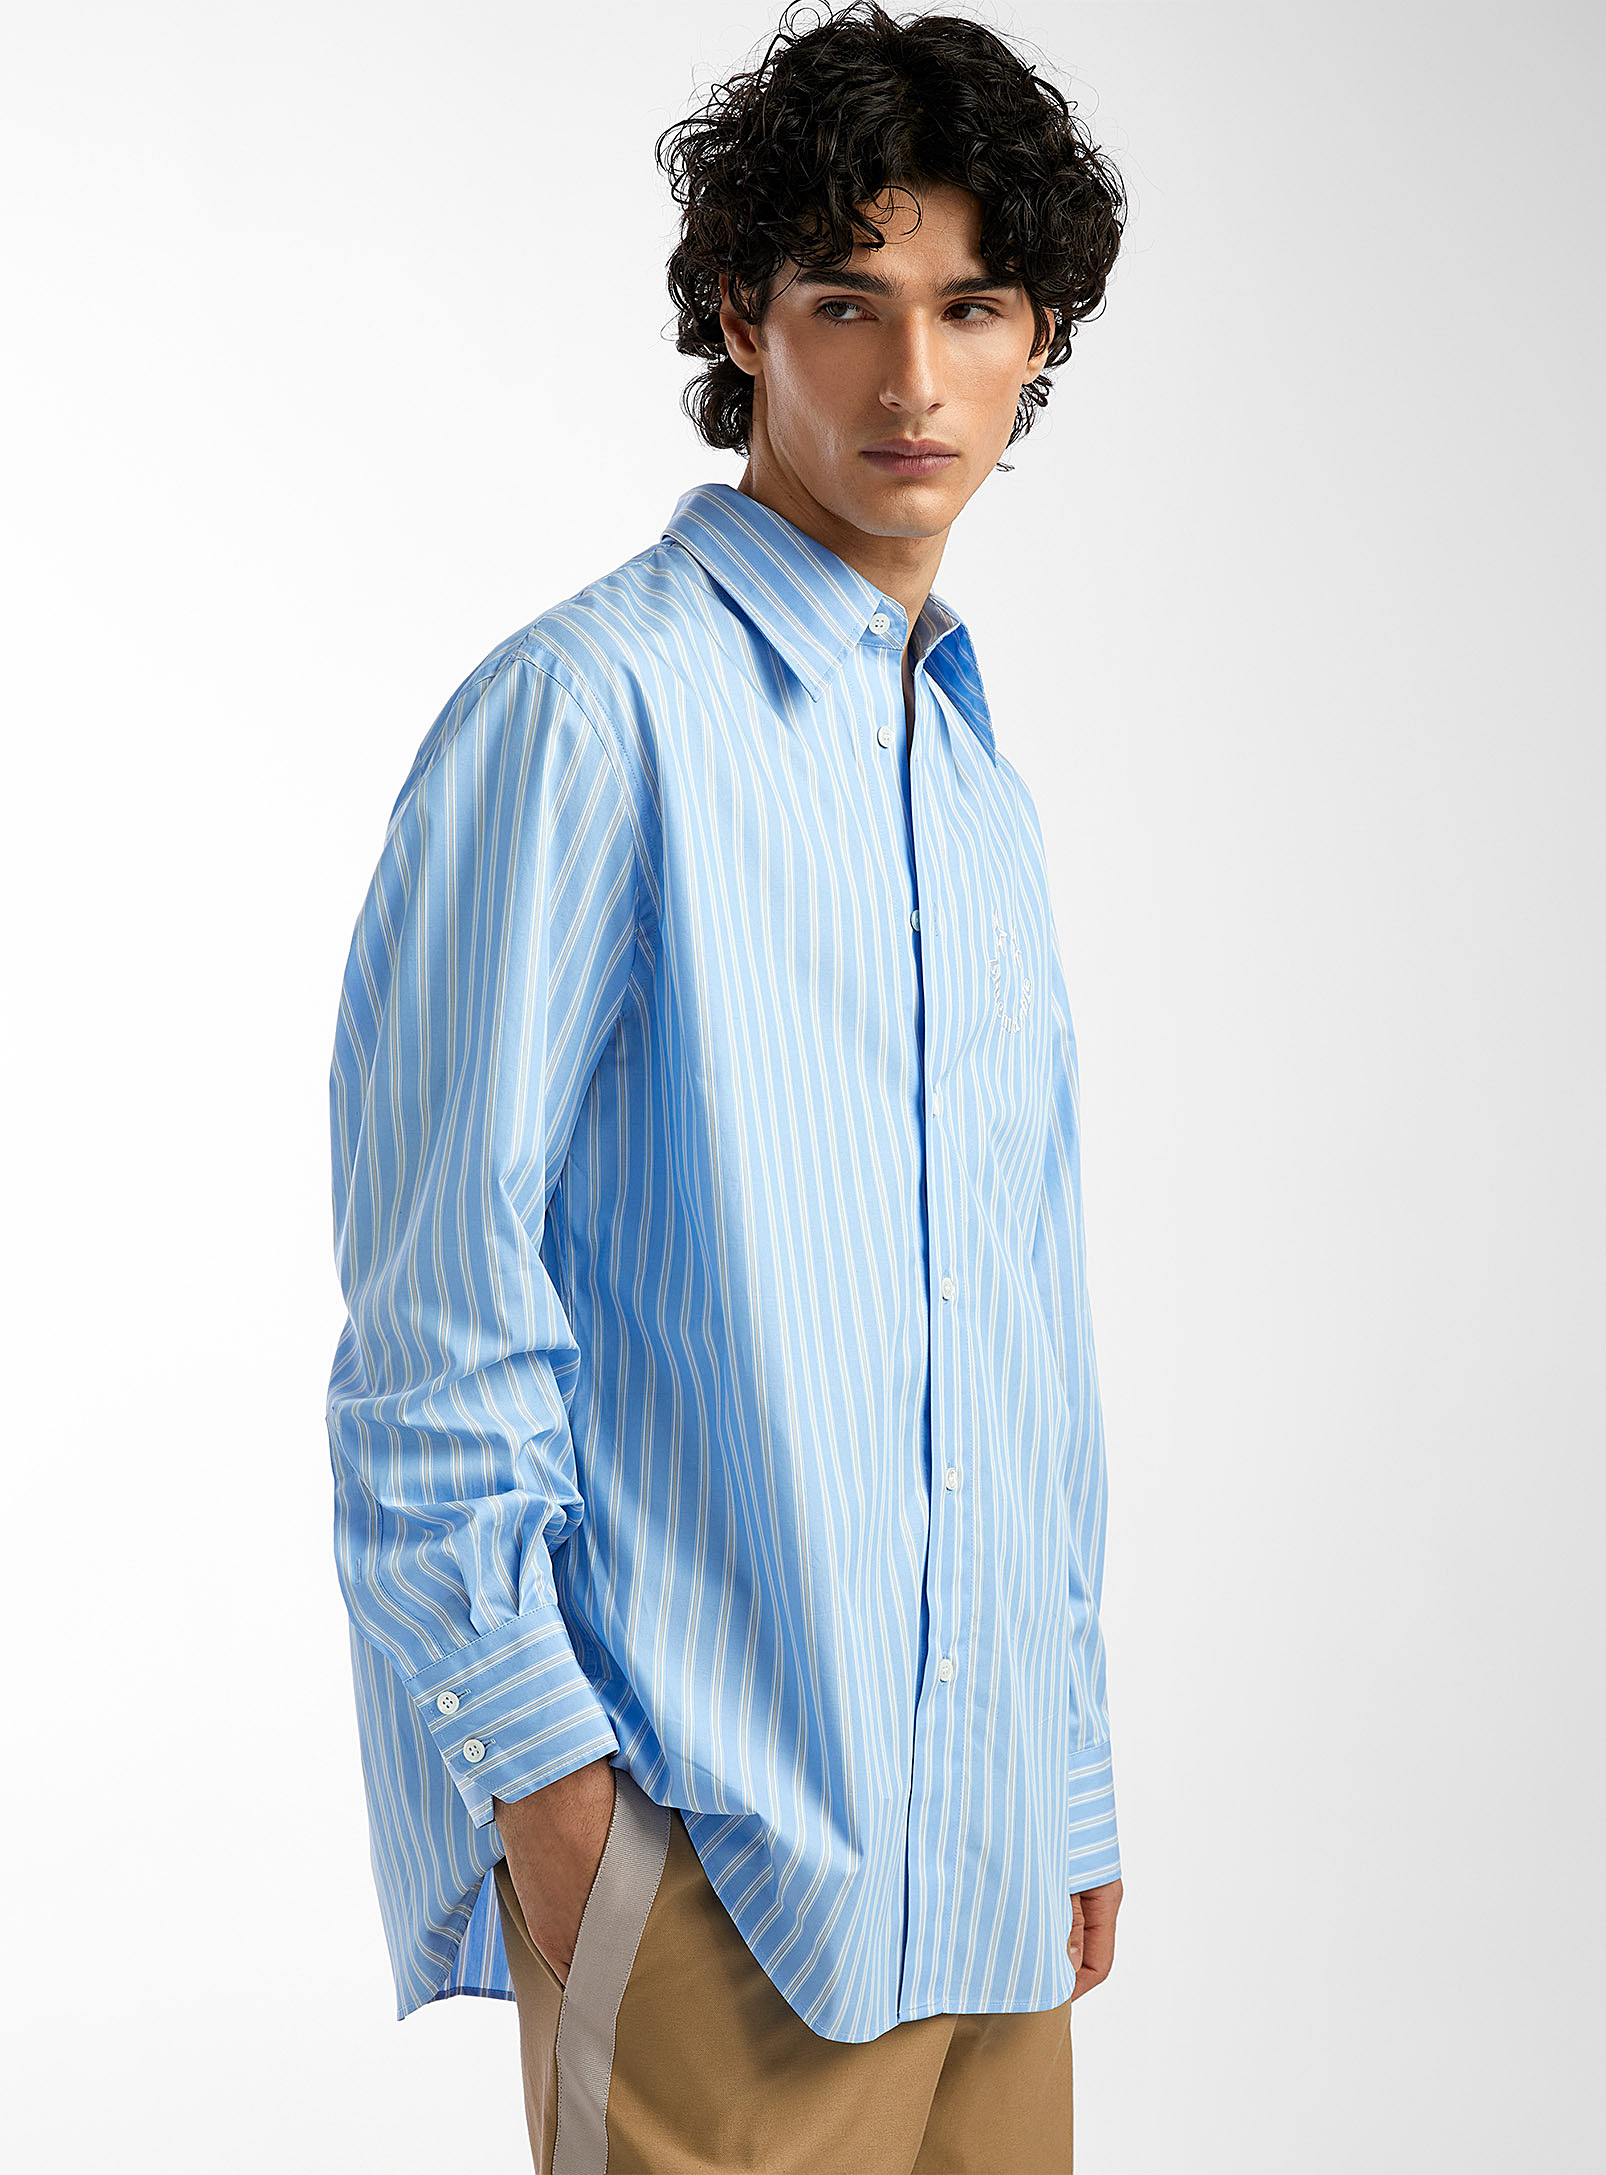 Bluemarble - Men's Pyjama stripes embroidered shirt